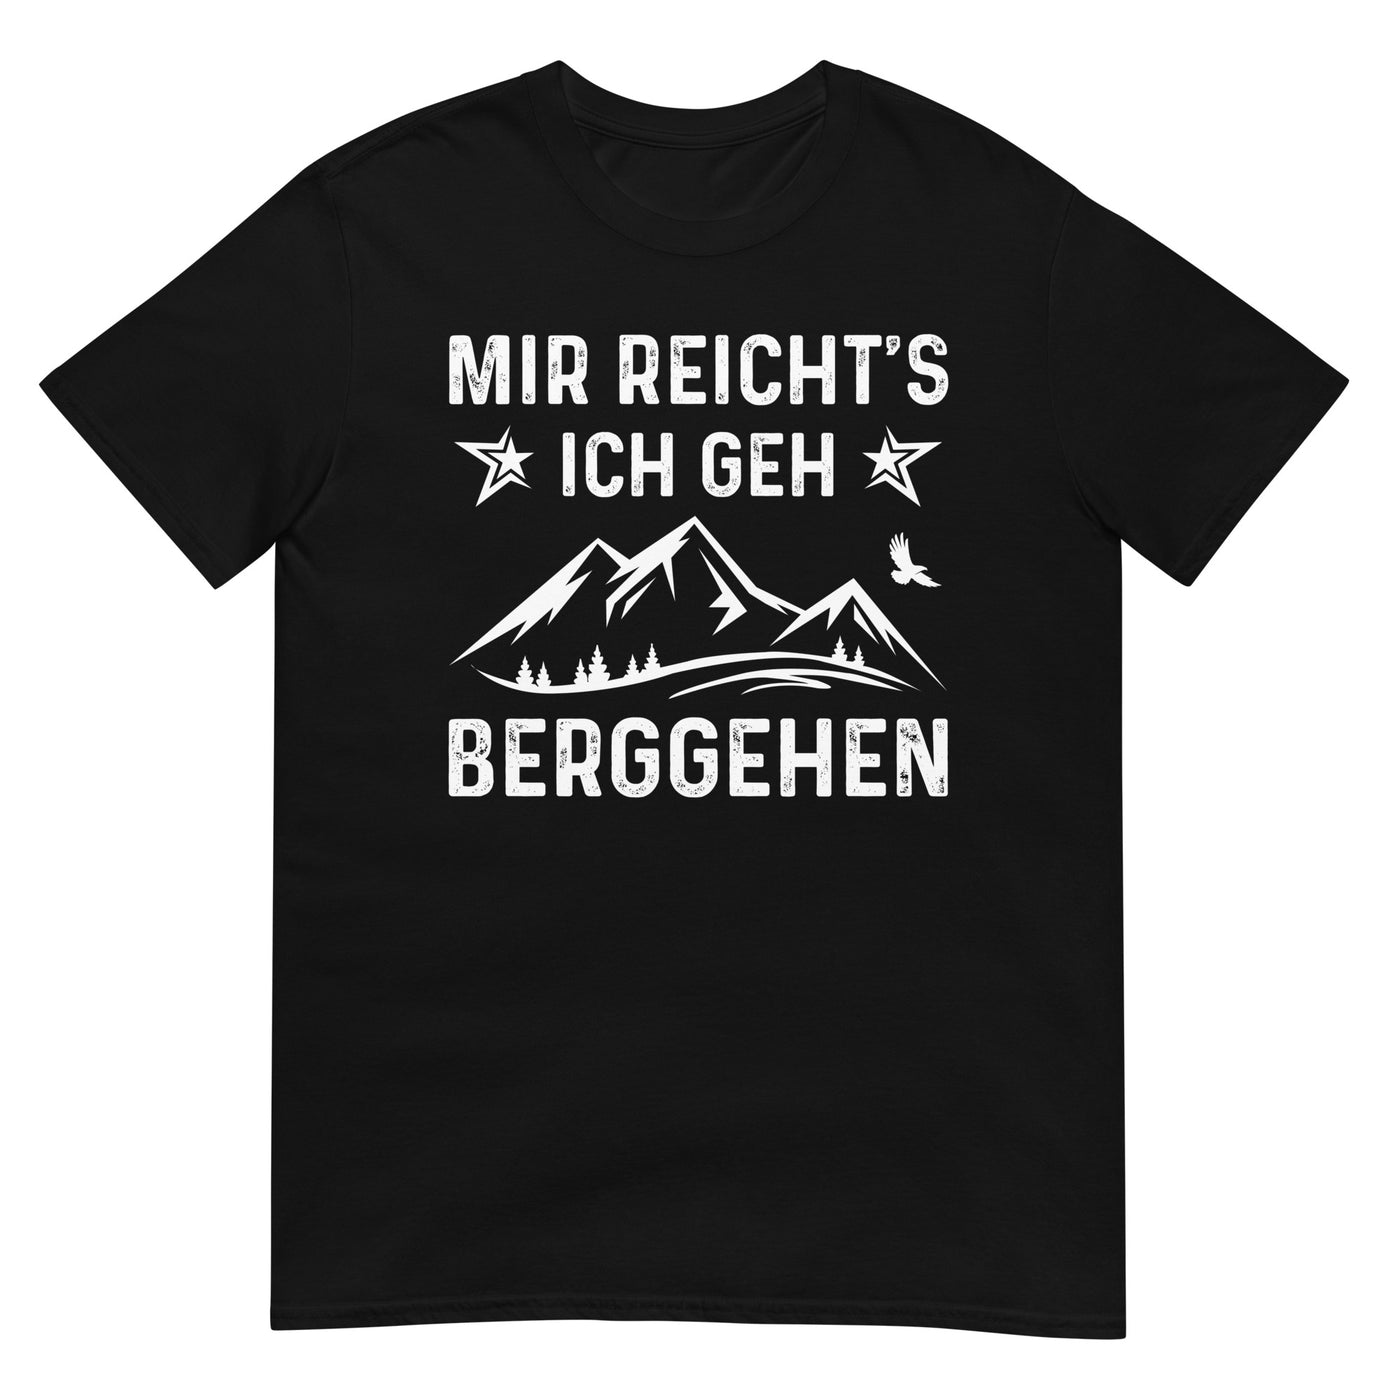 Mir Reicht's Ich Gen Berggehen - T-Shirt (Unisex) berge xxx yyy zzz Black